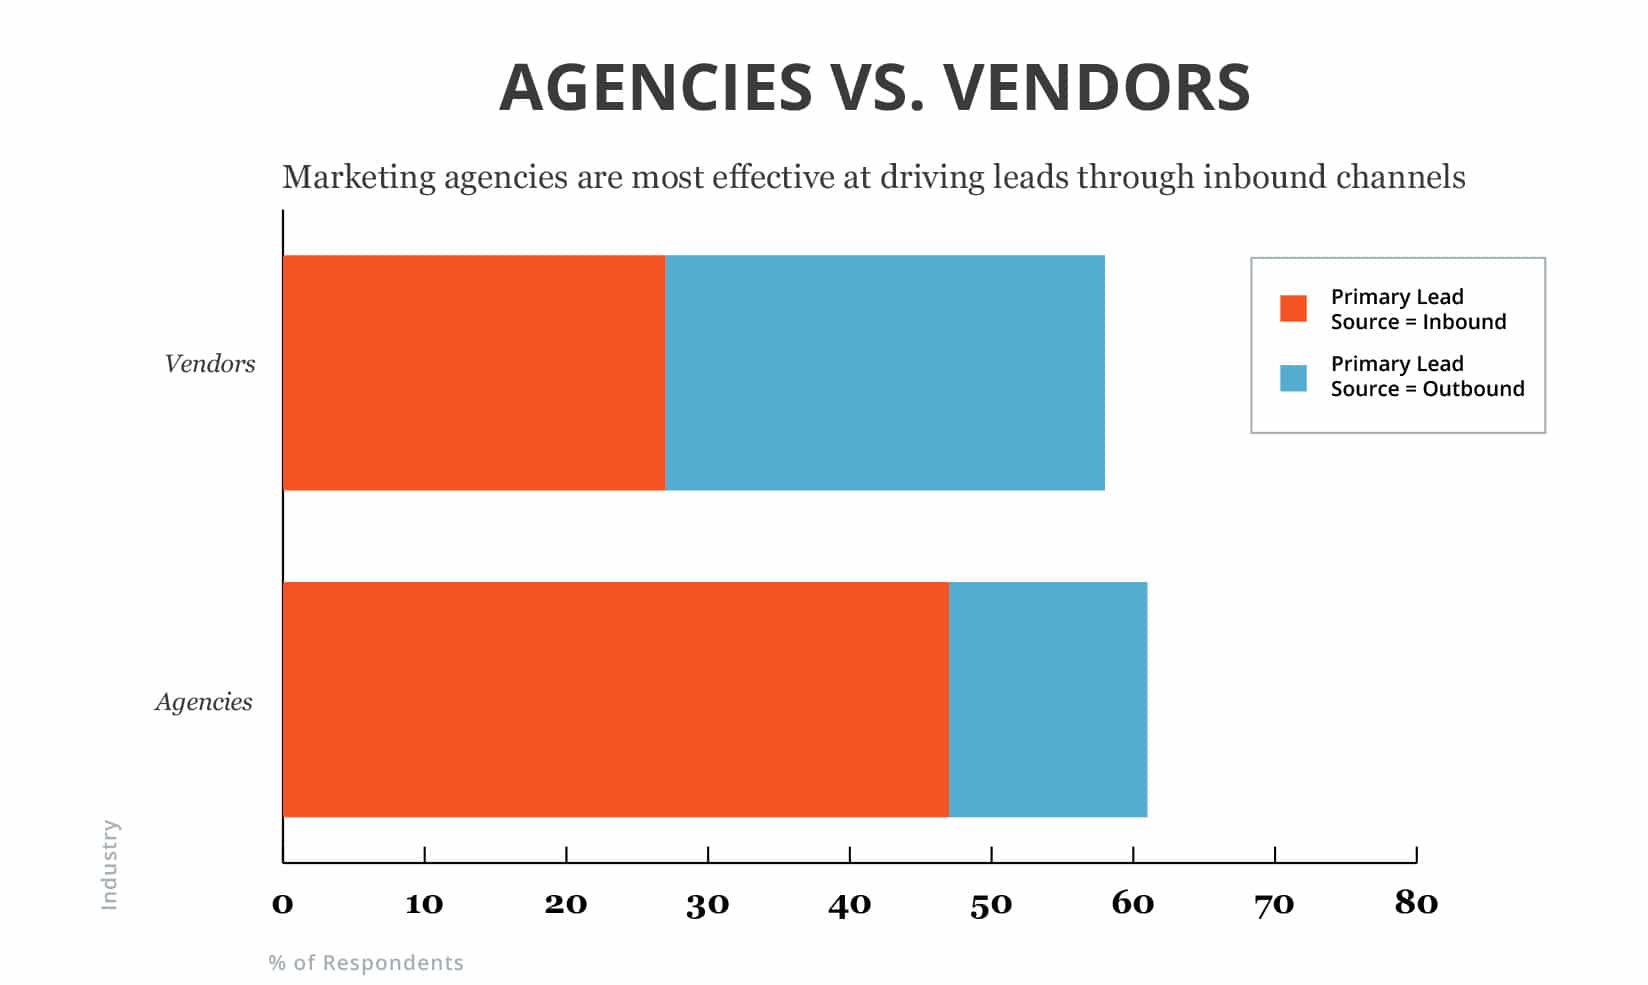 Agencies vs Vendors On Inbound Marketing Leads